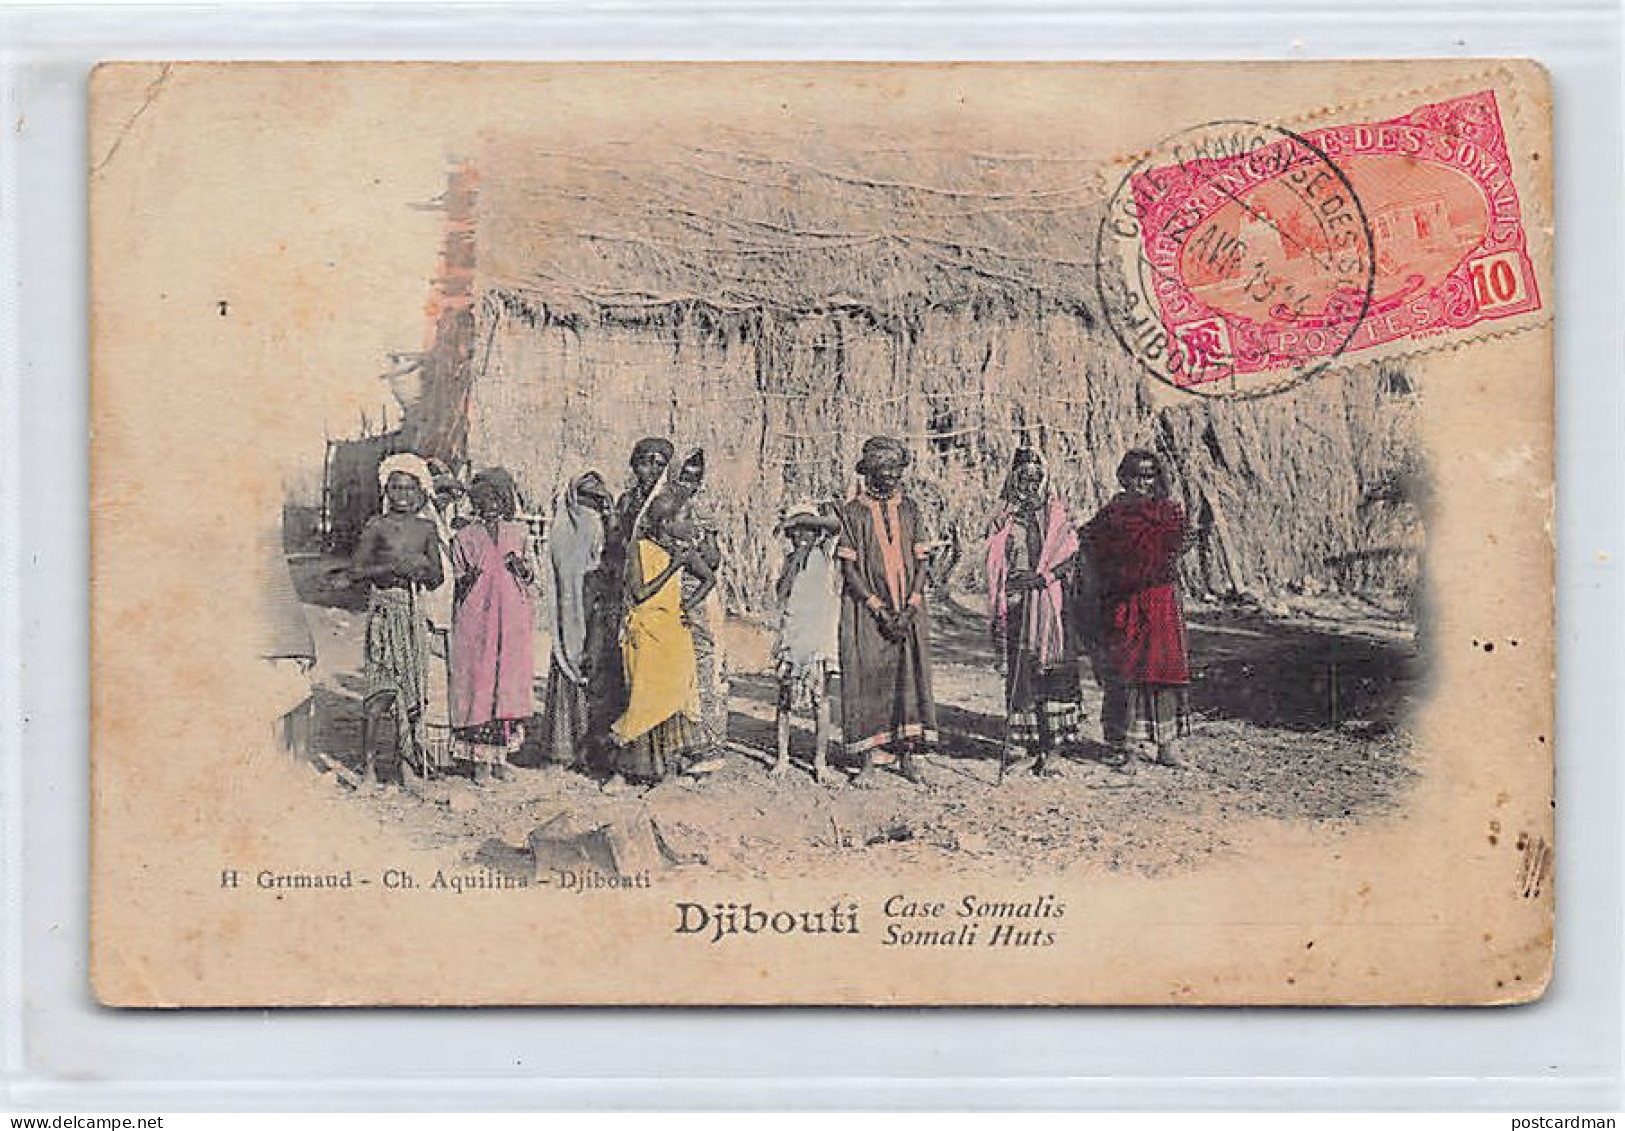 DJIBOUTI - Case Somalie - Ed. H. Grimaud - Ch. Aquilina  - Djibouti